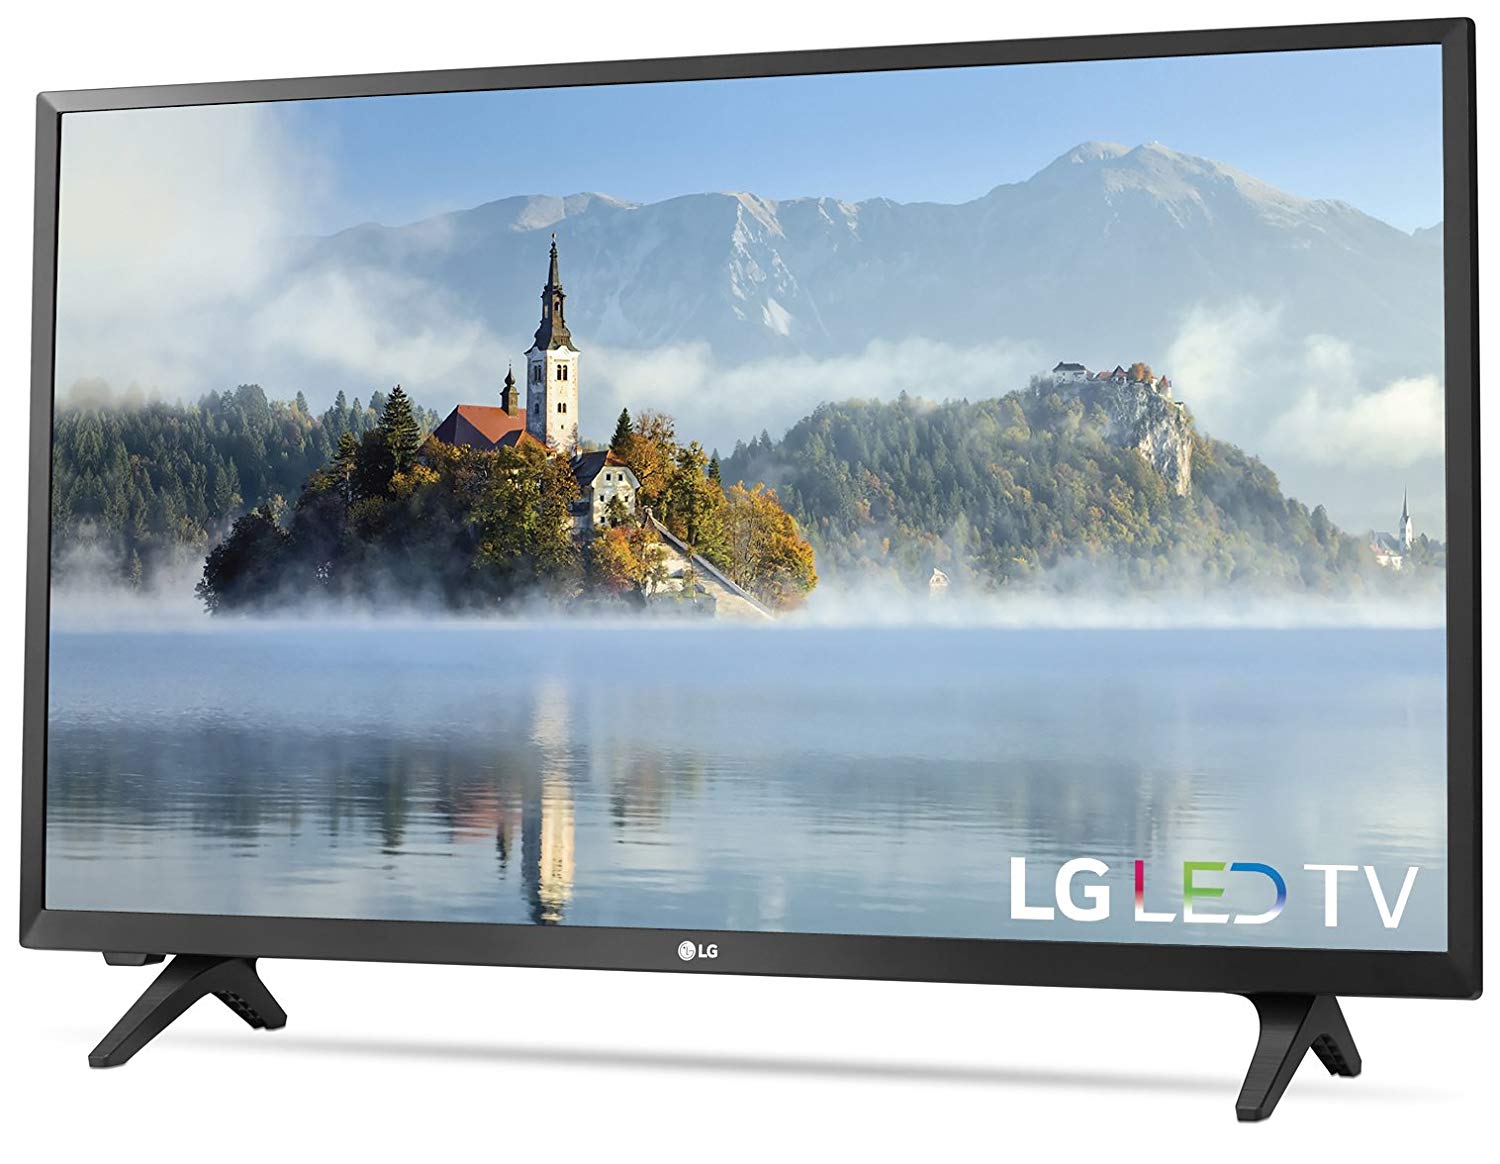 LG Electronics 32LJ500B Televisor LED de 32 puadas y 720p (modelo 2017)